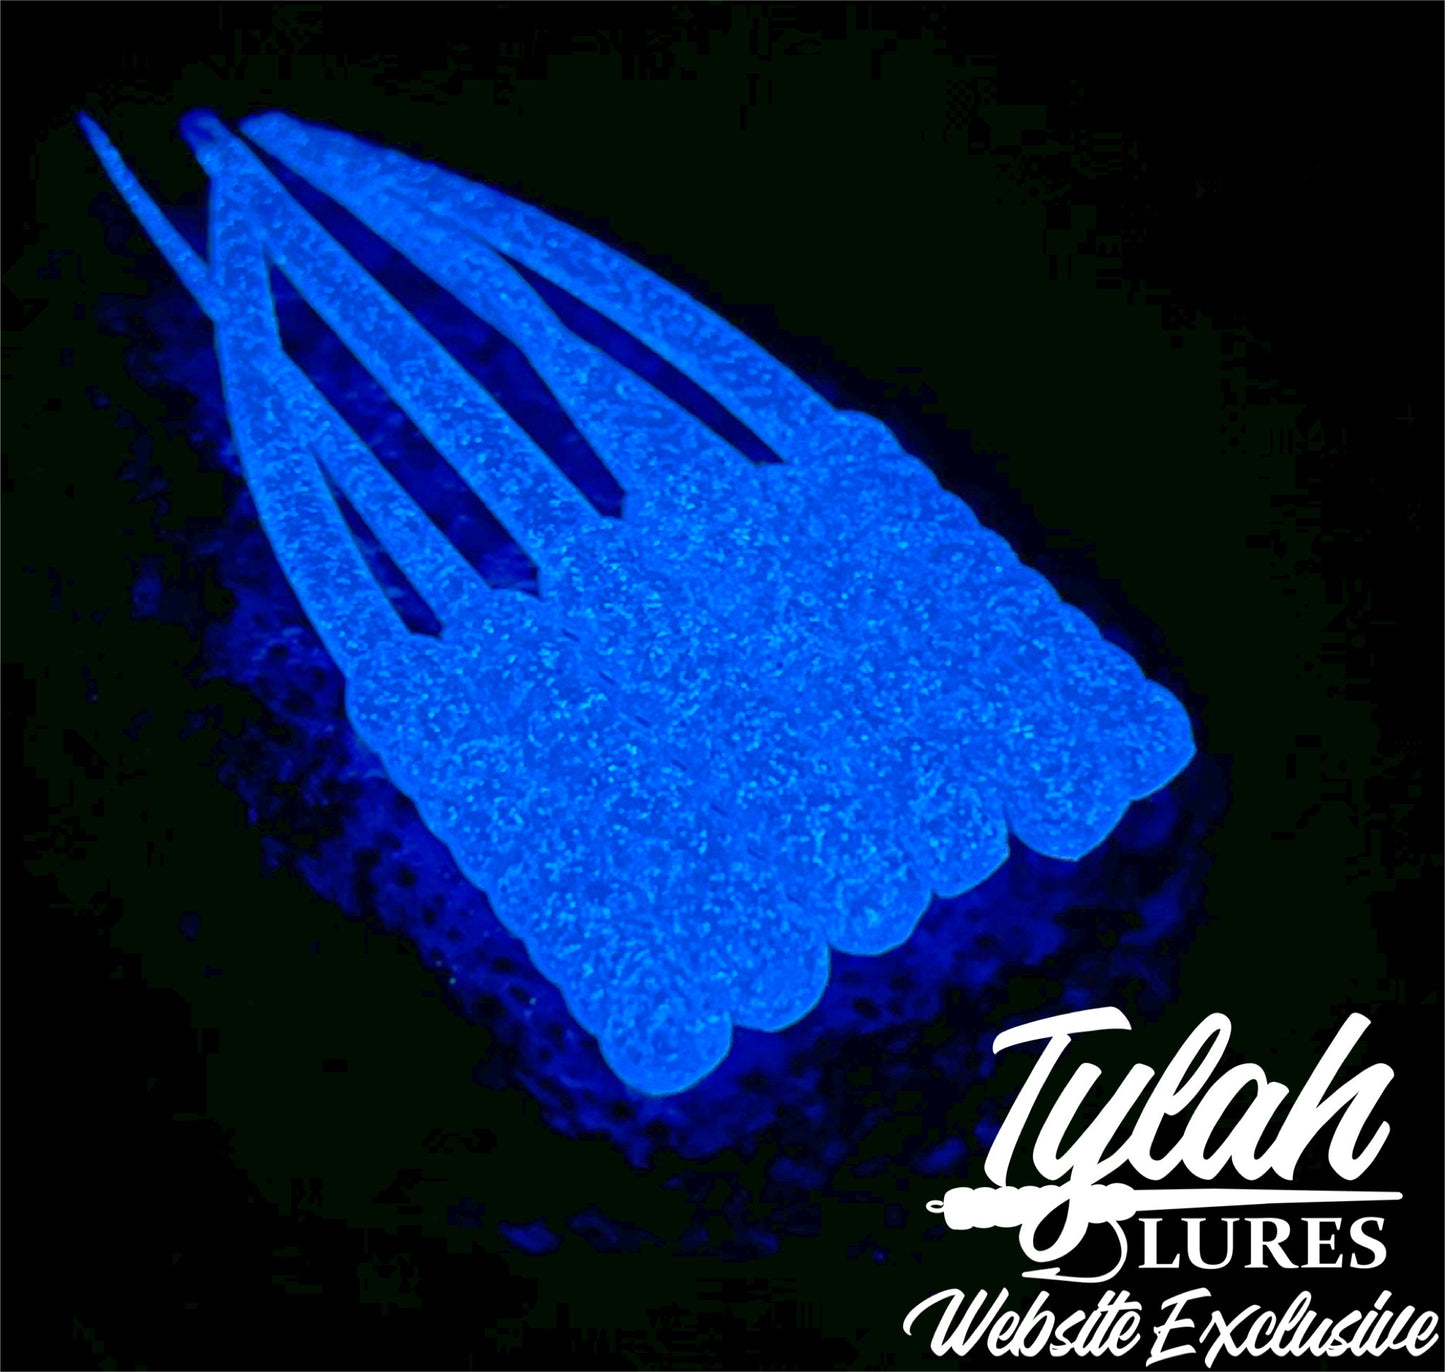 TylahLures Website Exclusive Blue Glow 2in.